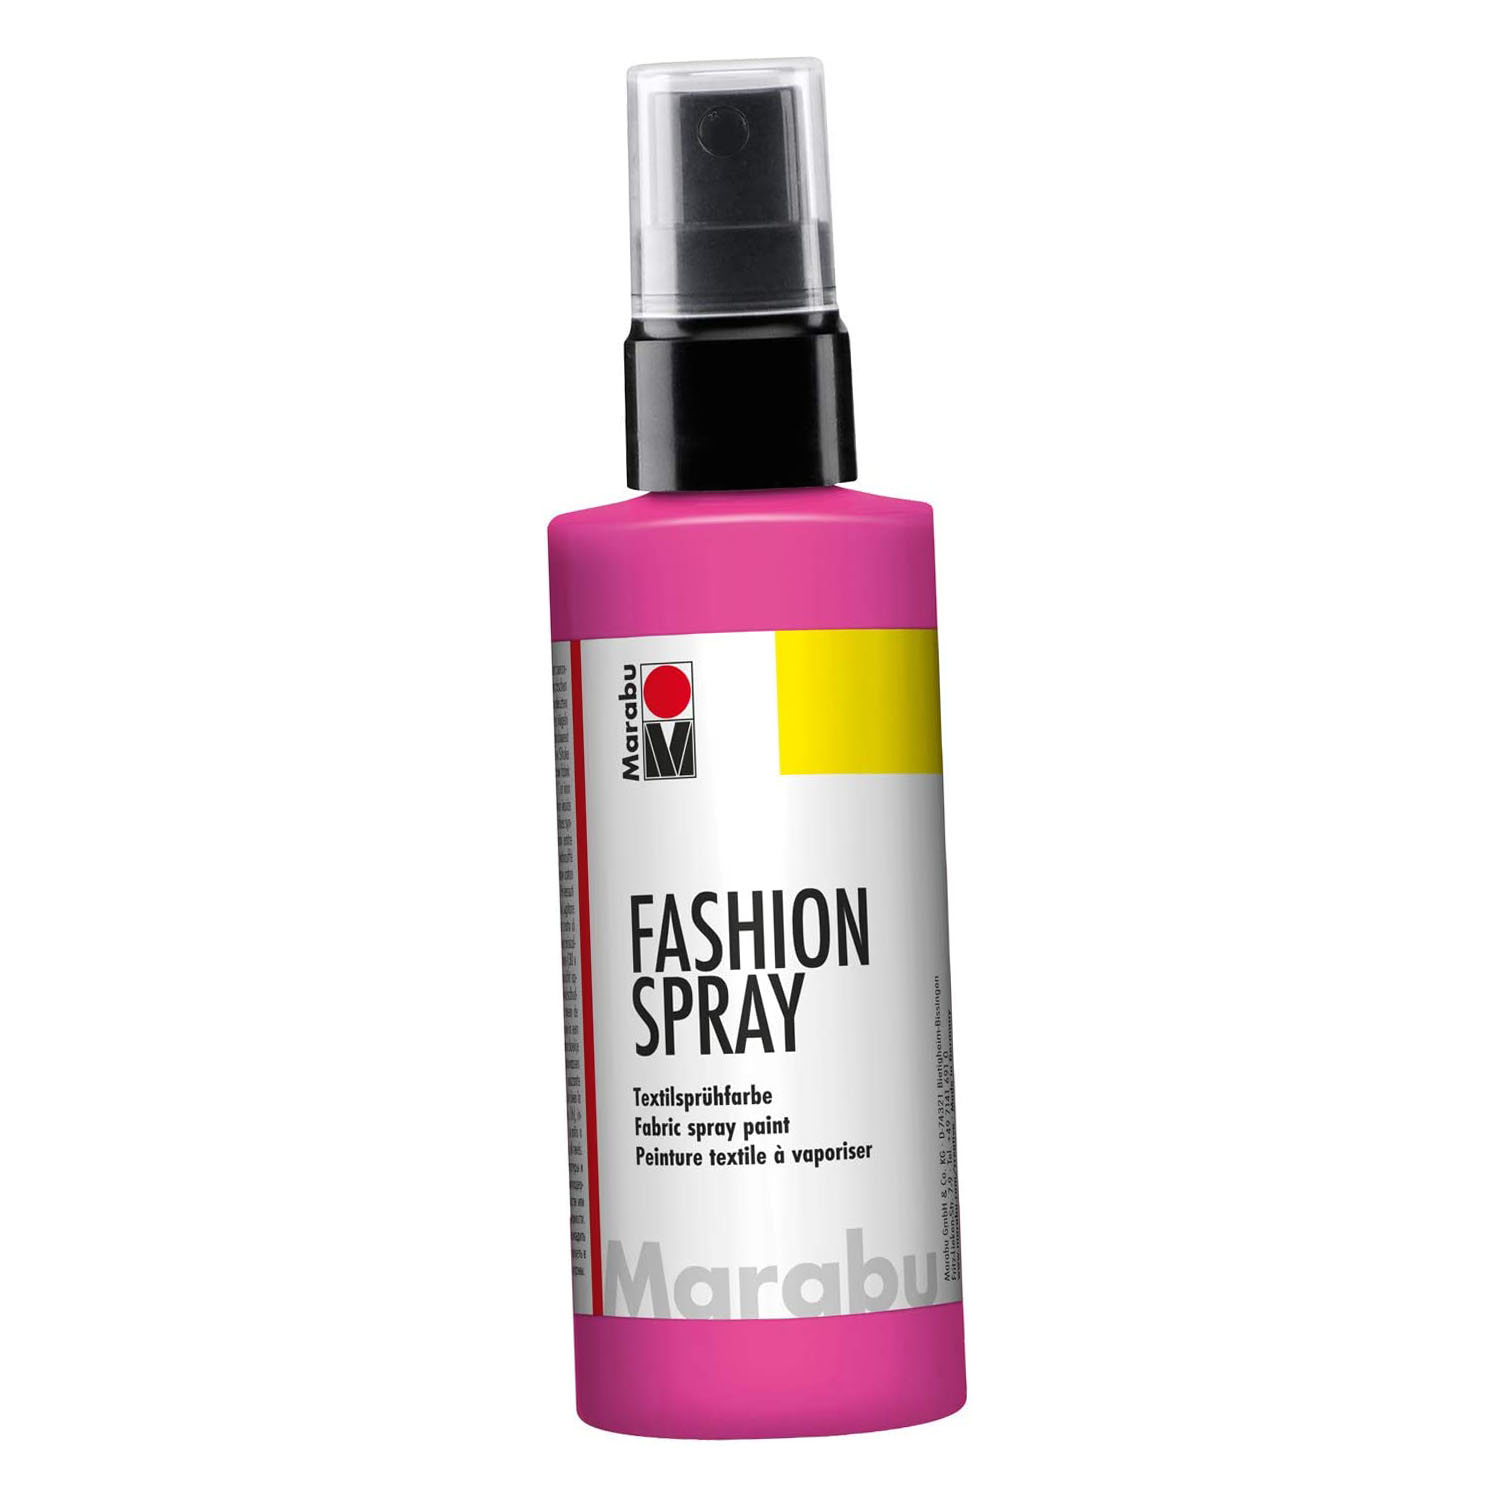 Marabu Textilsprhfarbe Fashion-Spray, pink, 100 ml